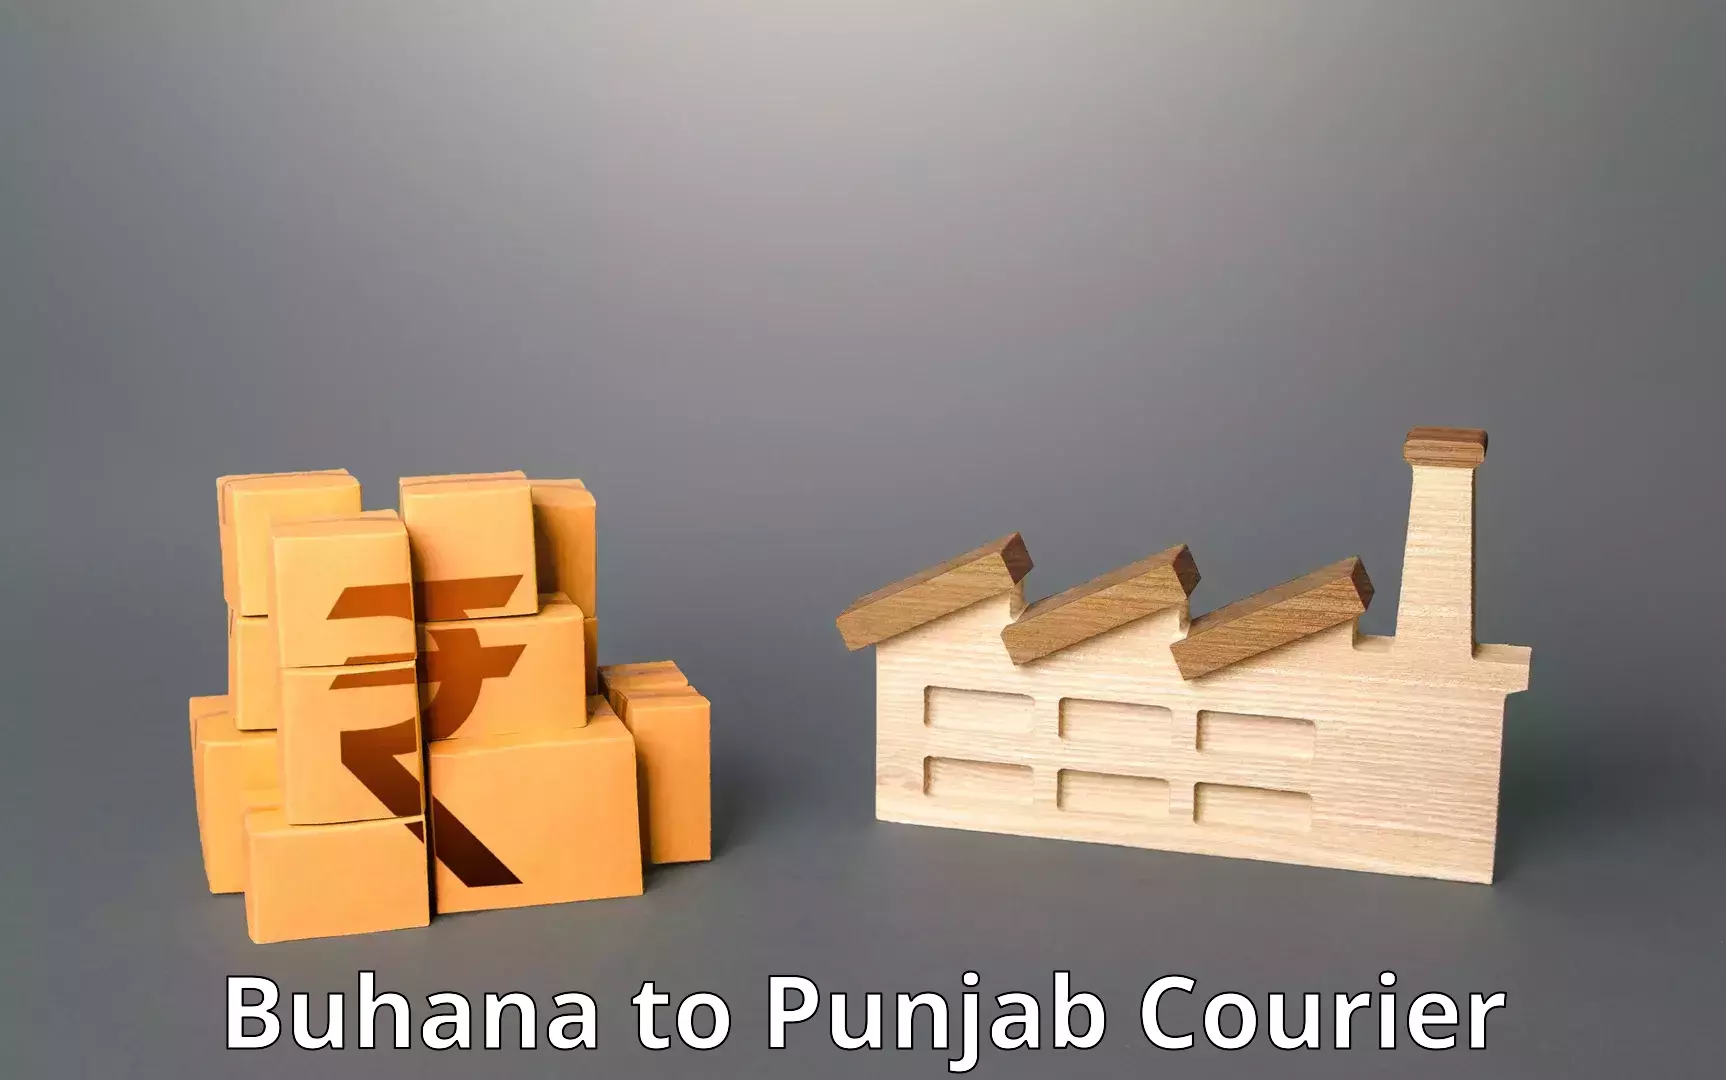 Nationwide parcel services Buhana to Punjab